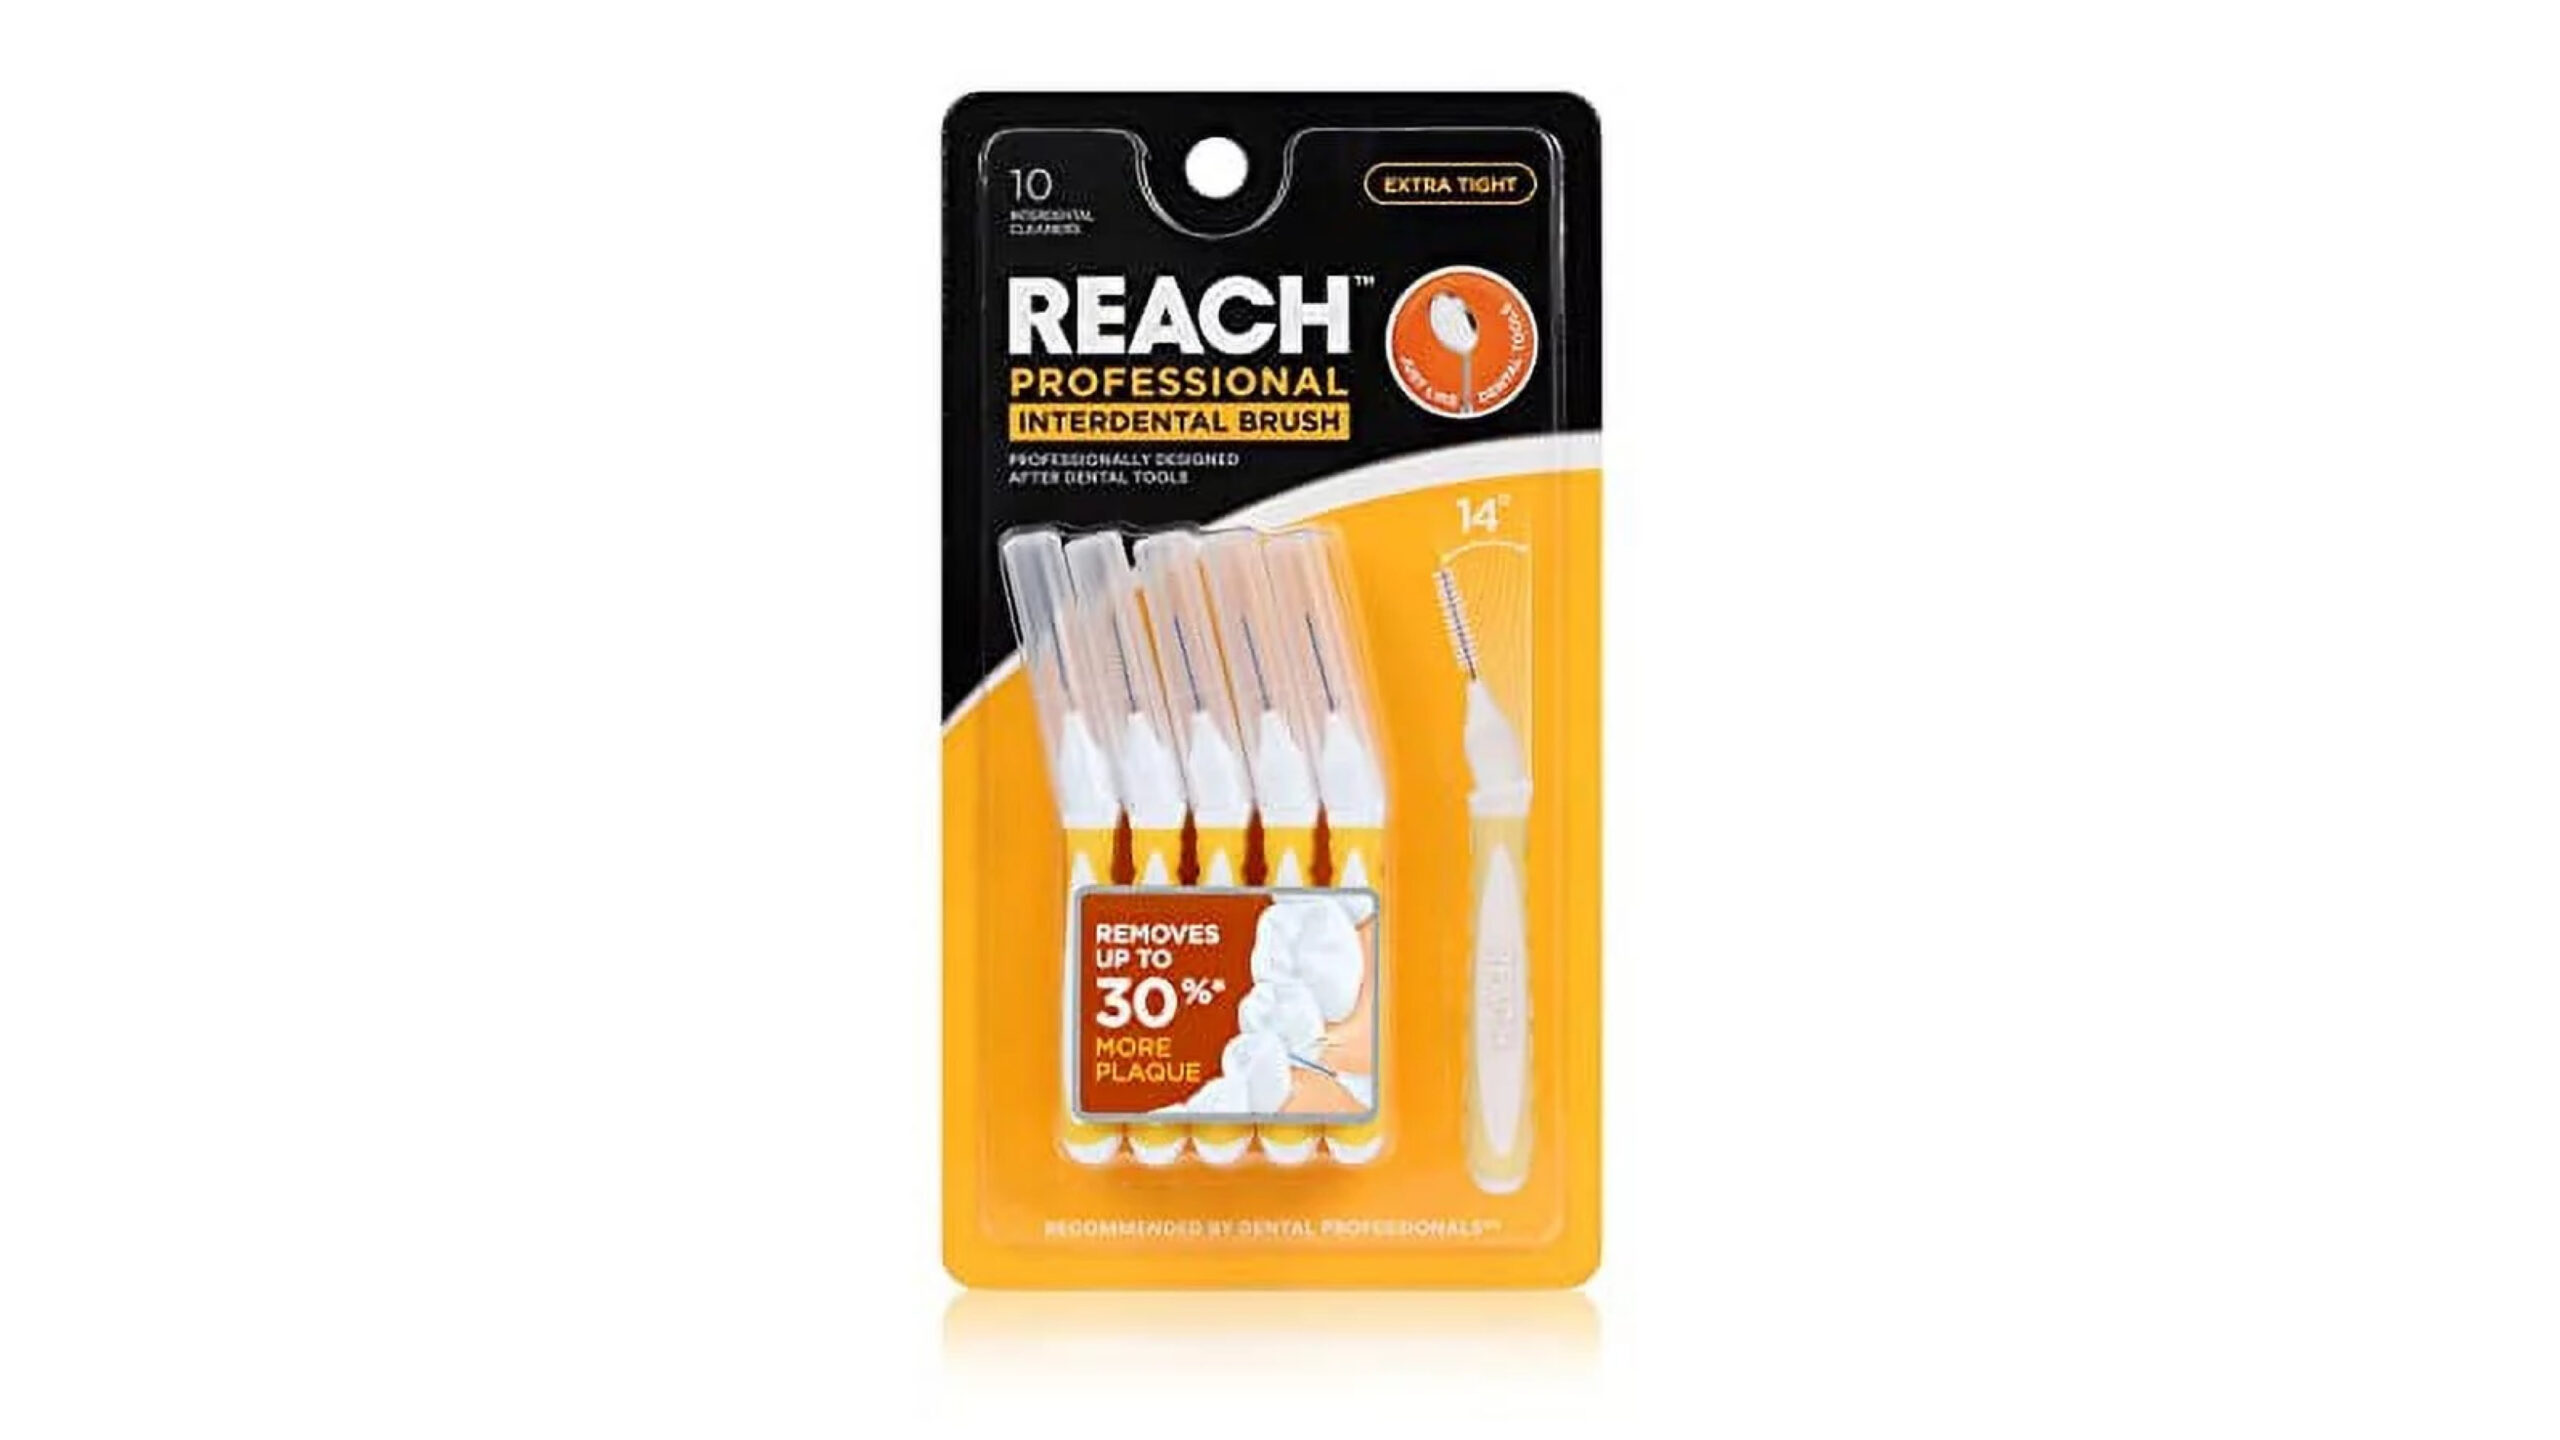 packet of Reach interdental toothbrush